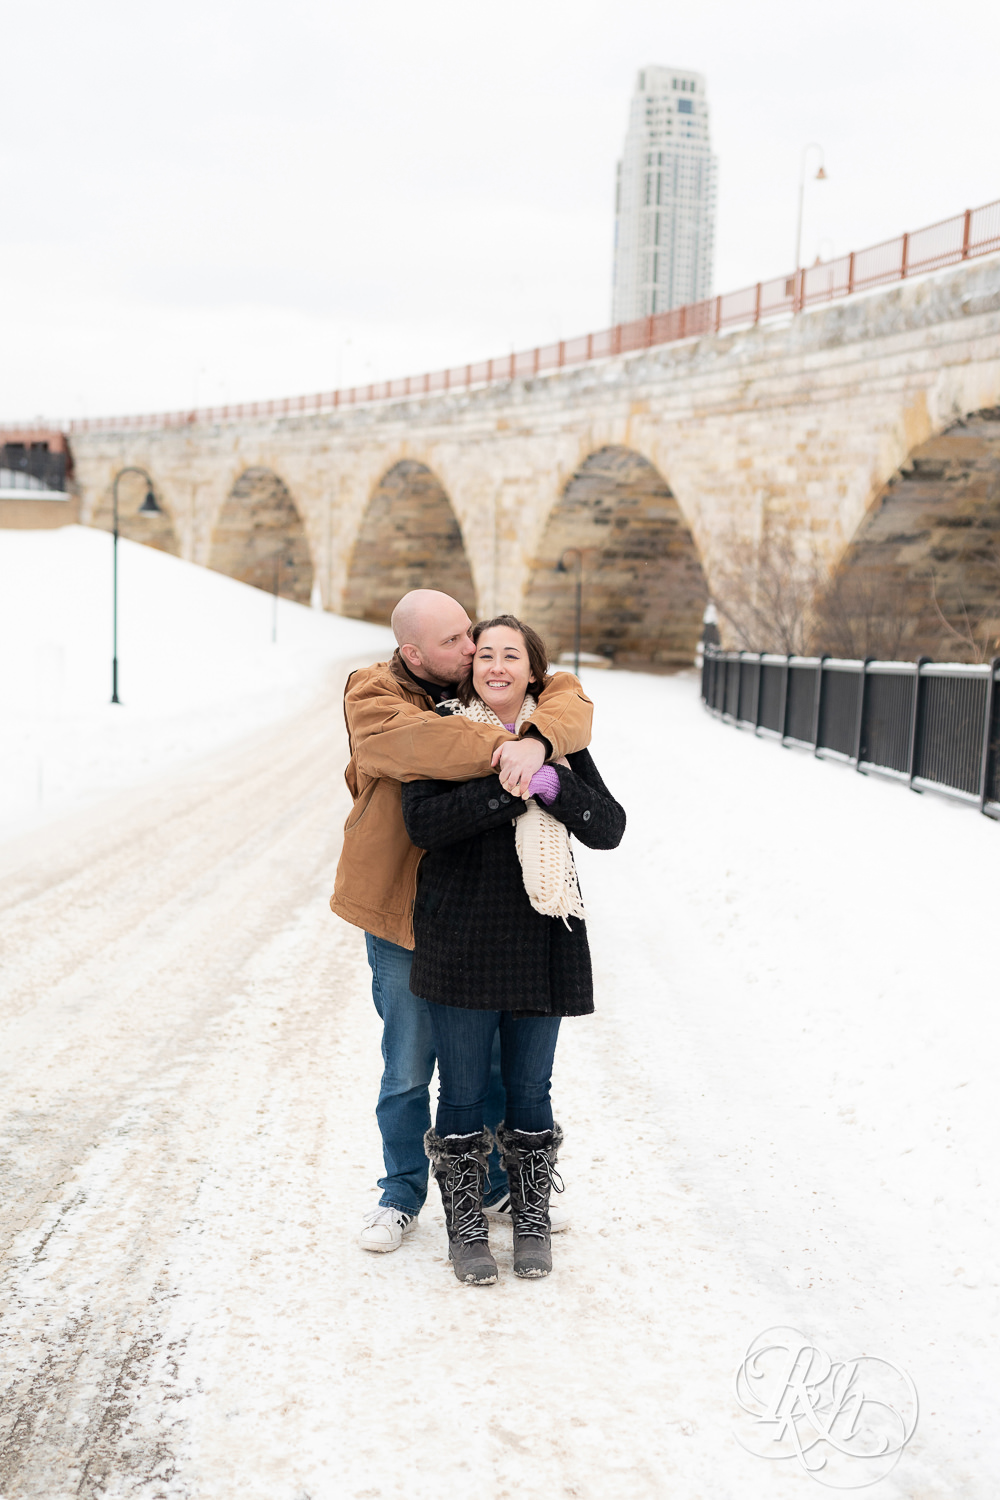 Man kisses woman in snow at Mill City Ruins in Minneapolis, Minnesota.